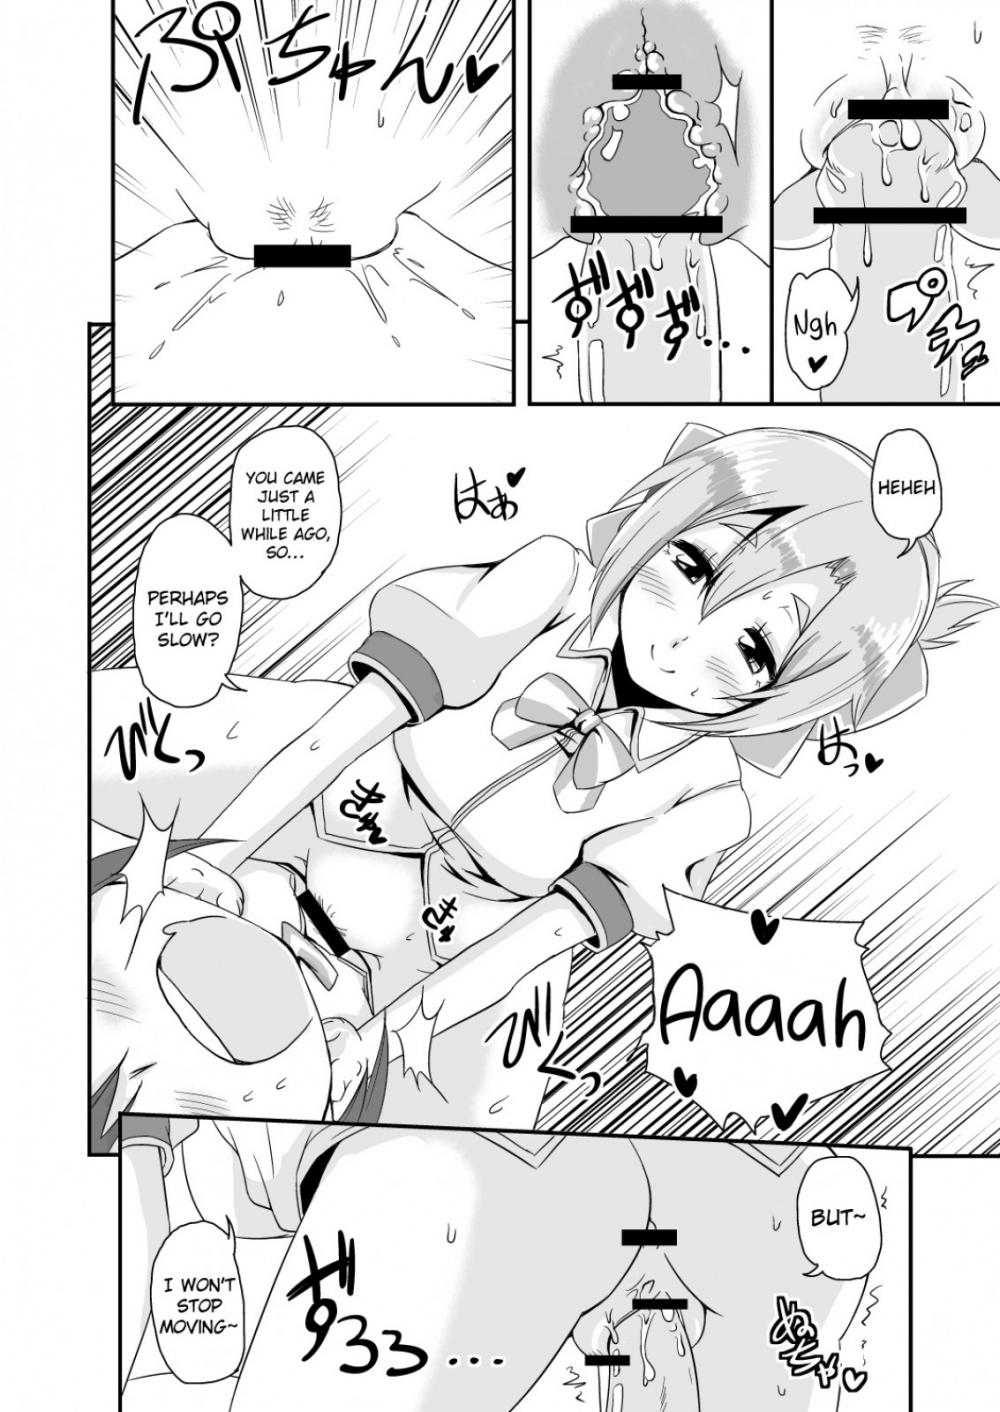 Hentai Manga Comic-Do You Know Who Did This?-Read-9